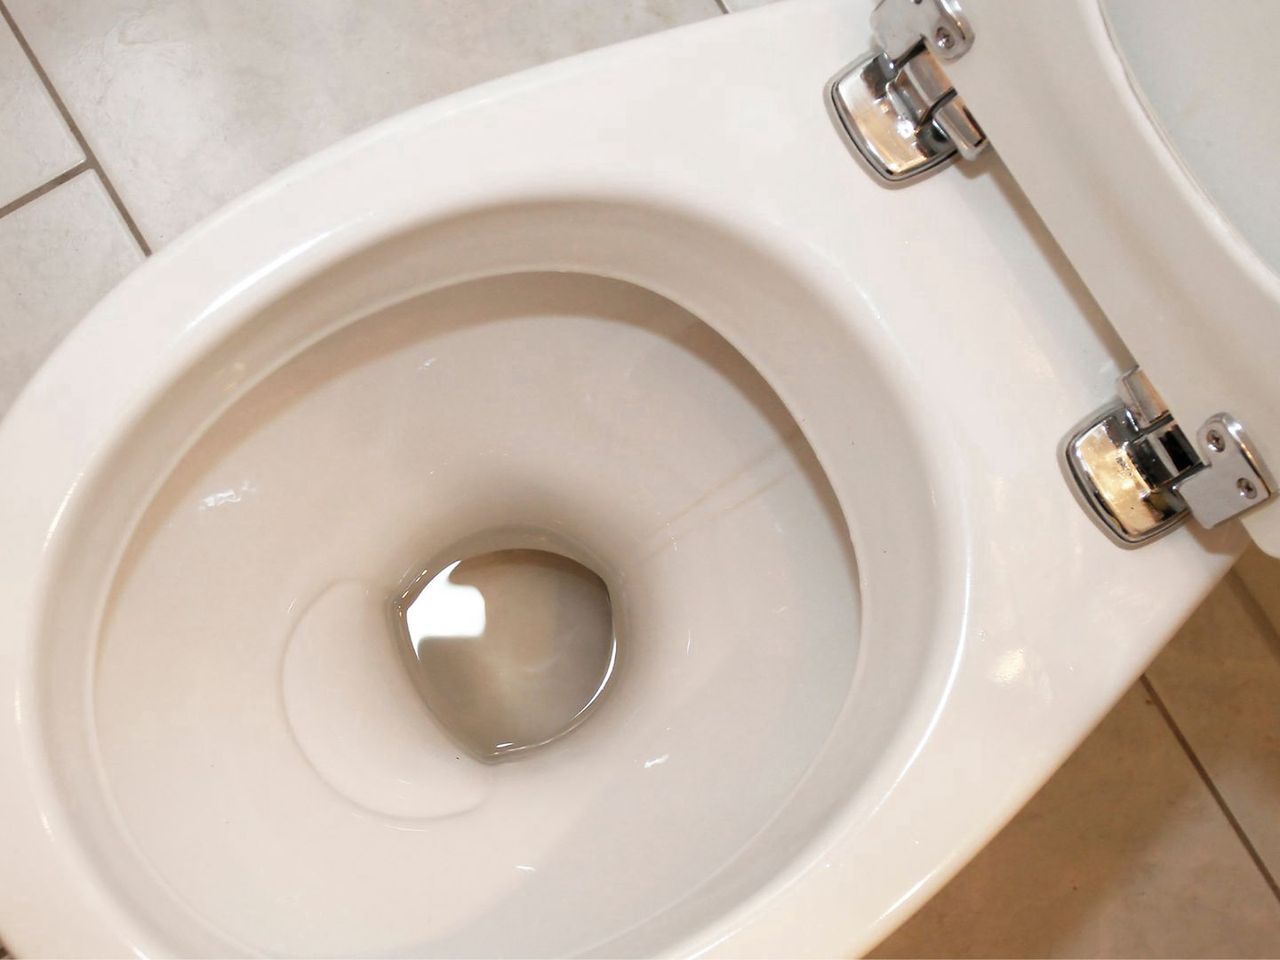 Spray away germs. Bathroom cleaning hack using shaving foam leaves toilets spotless